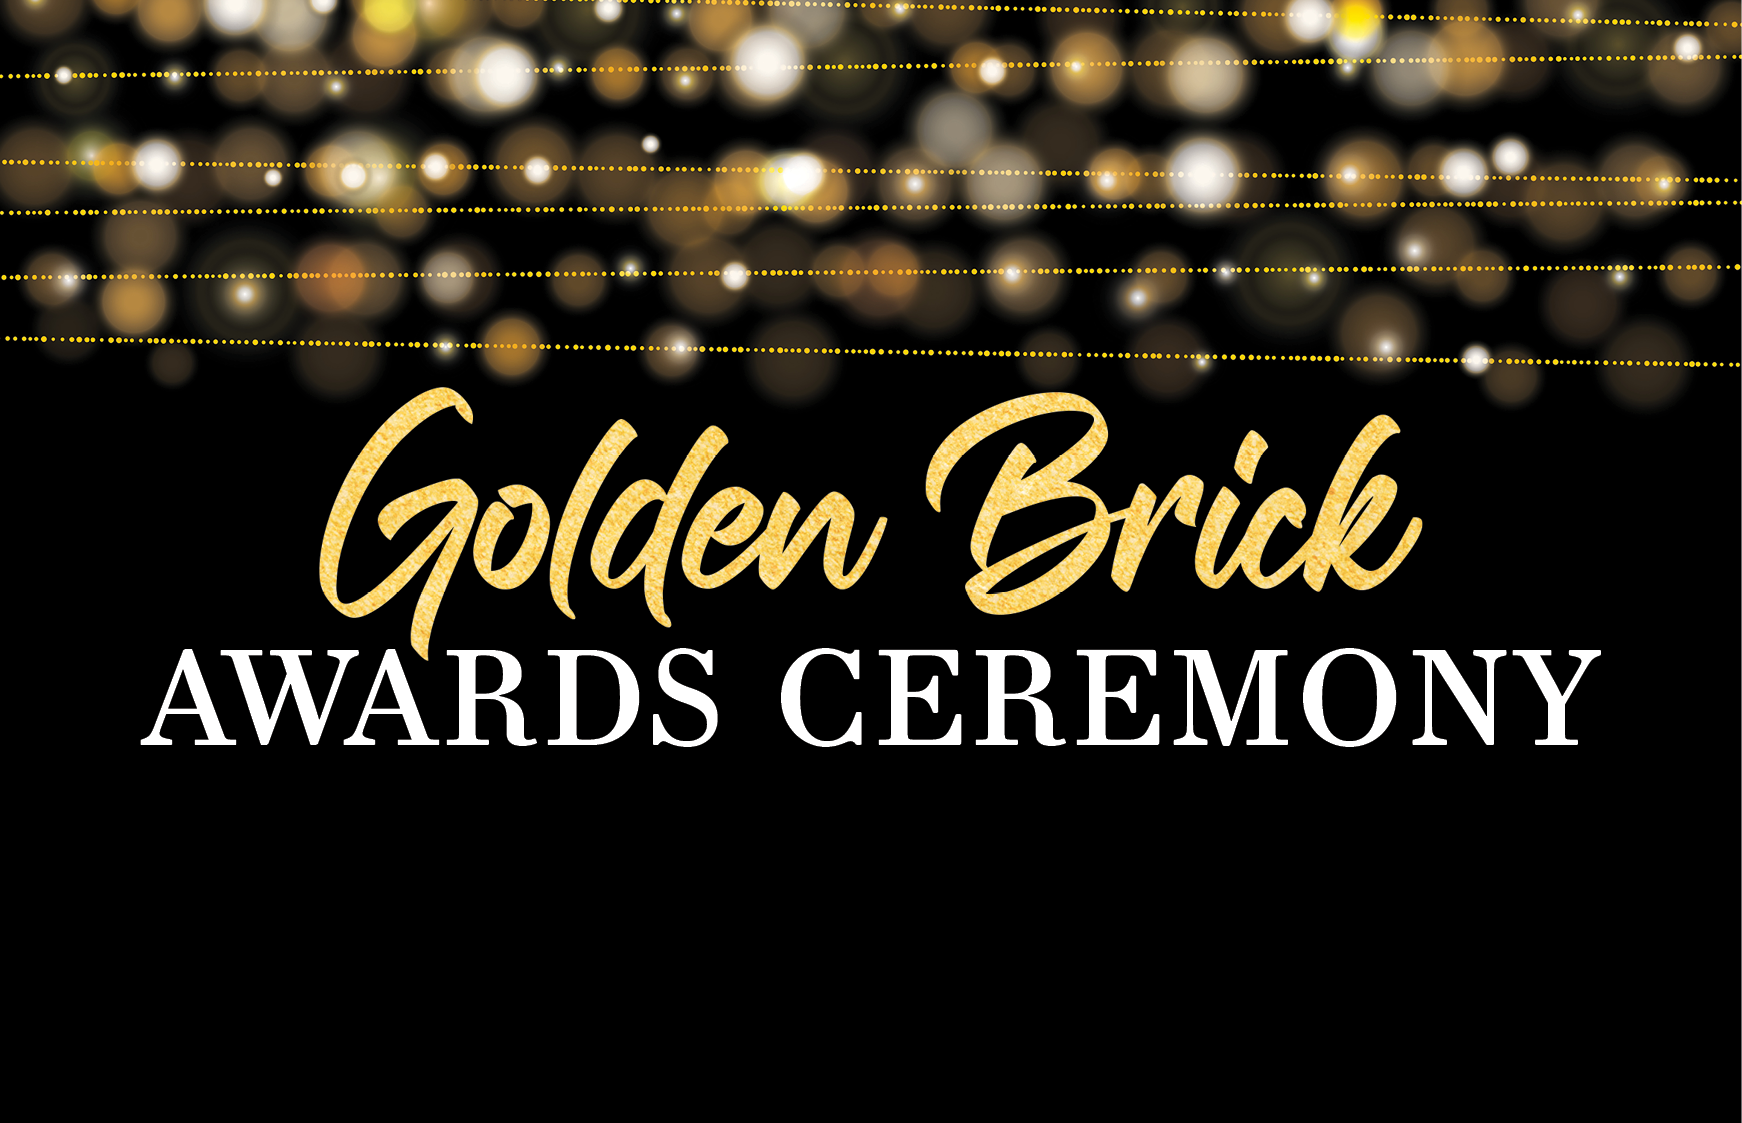 golden brick awards